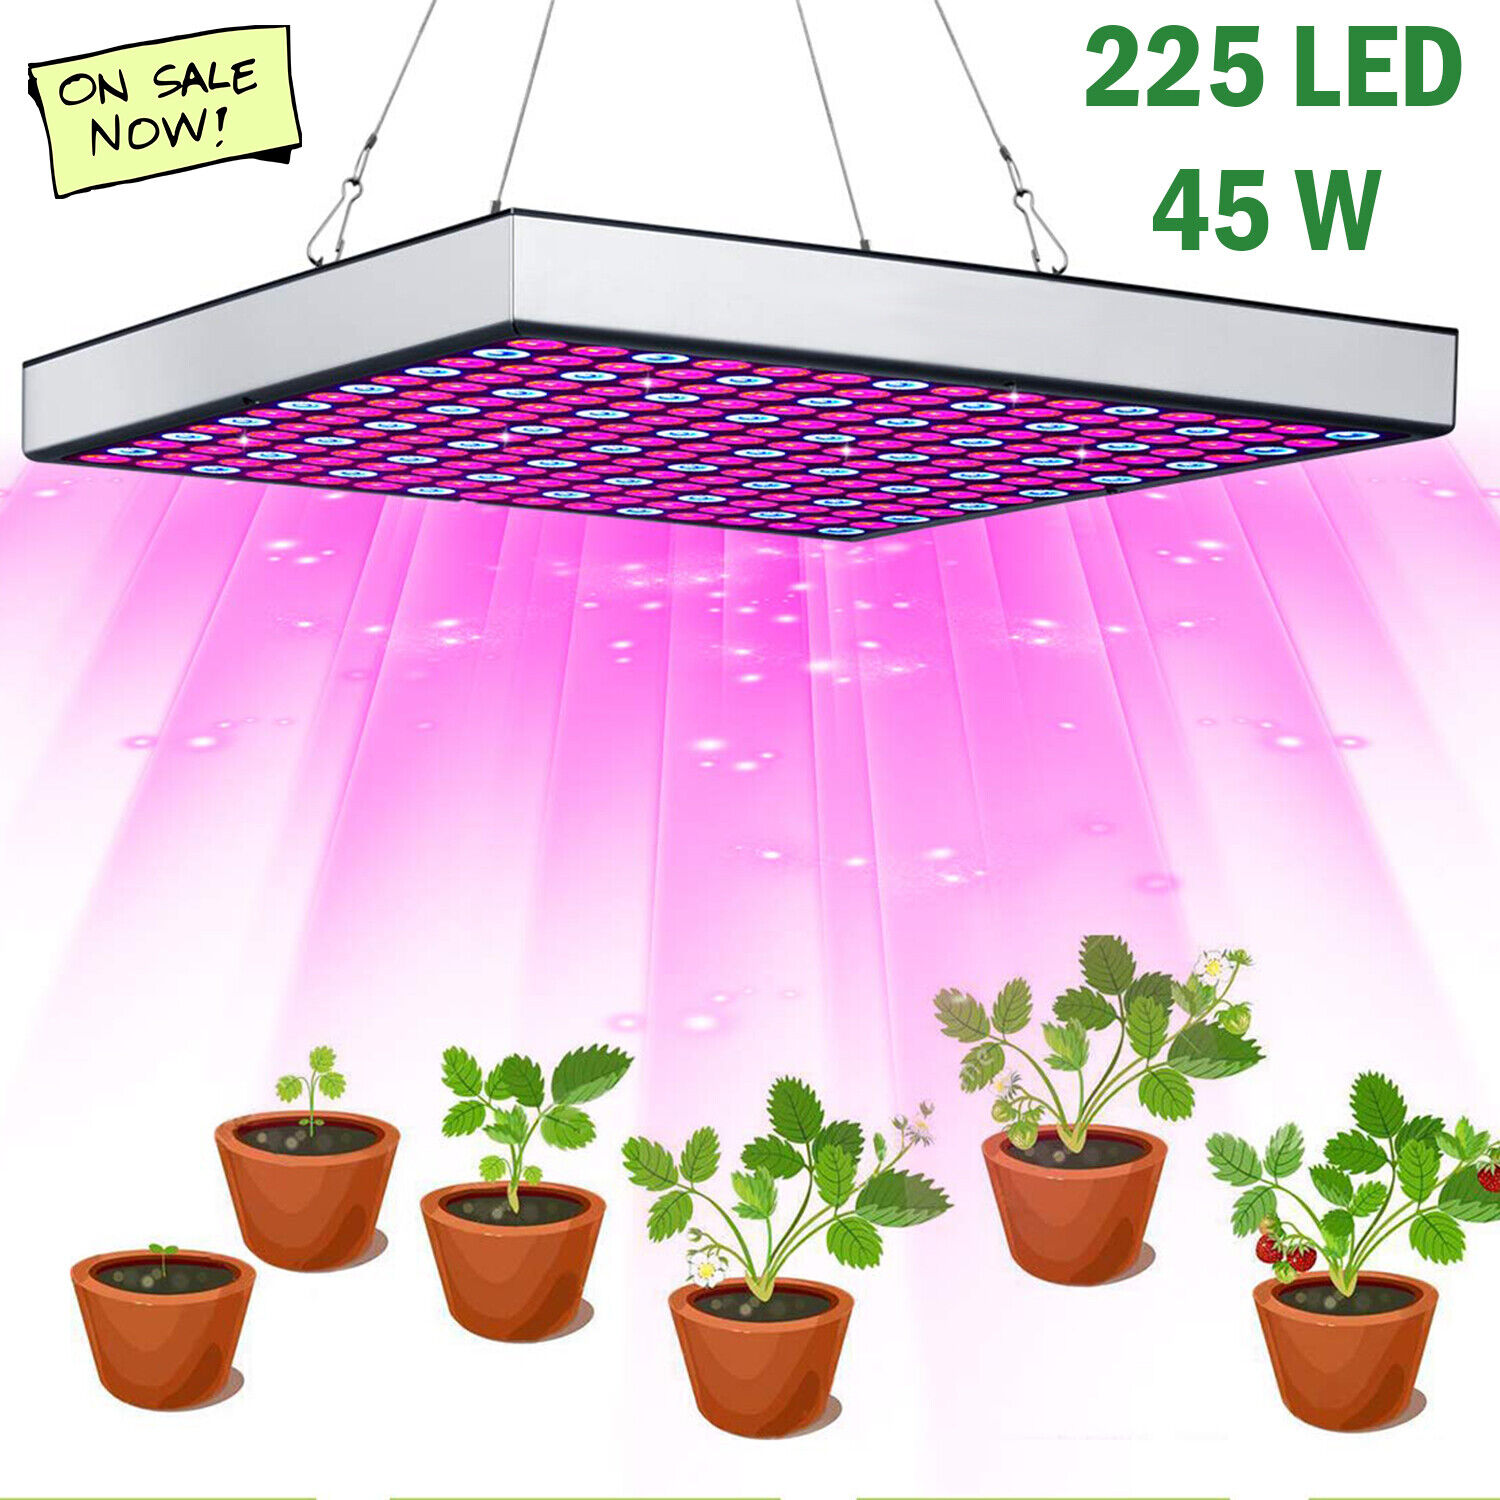 2000W LED Grow Light for Indoor Veg Plants Growing Lamp 225 LED Full Spectrum A